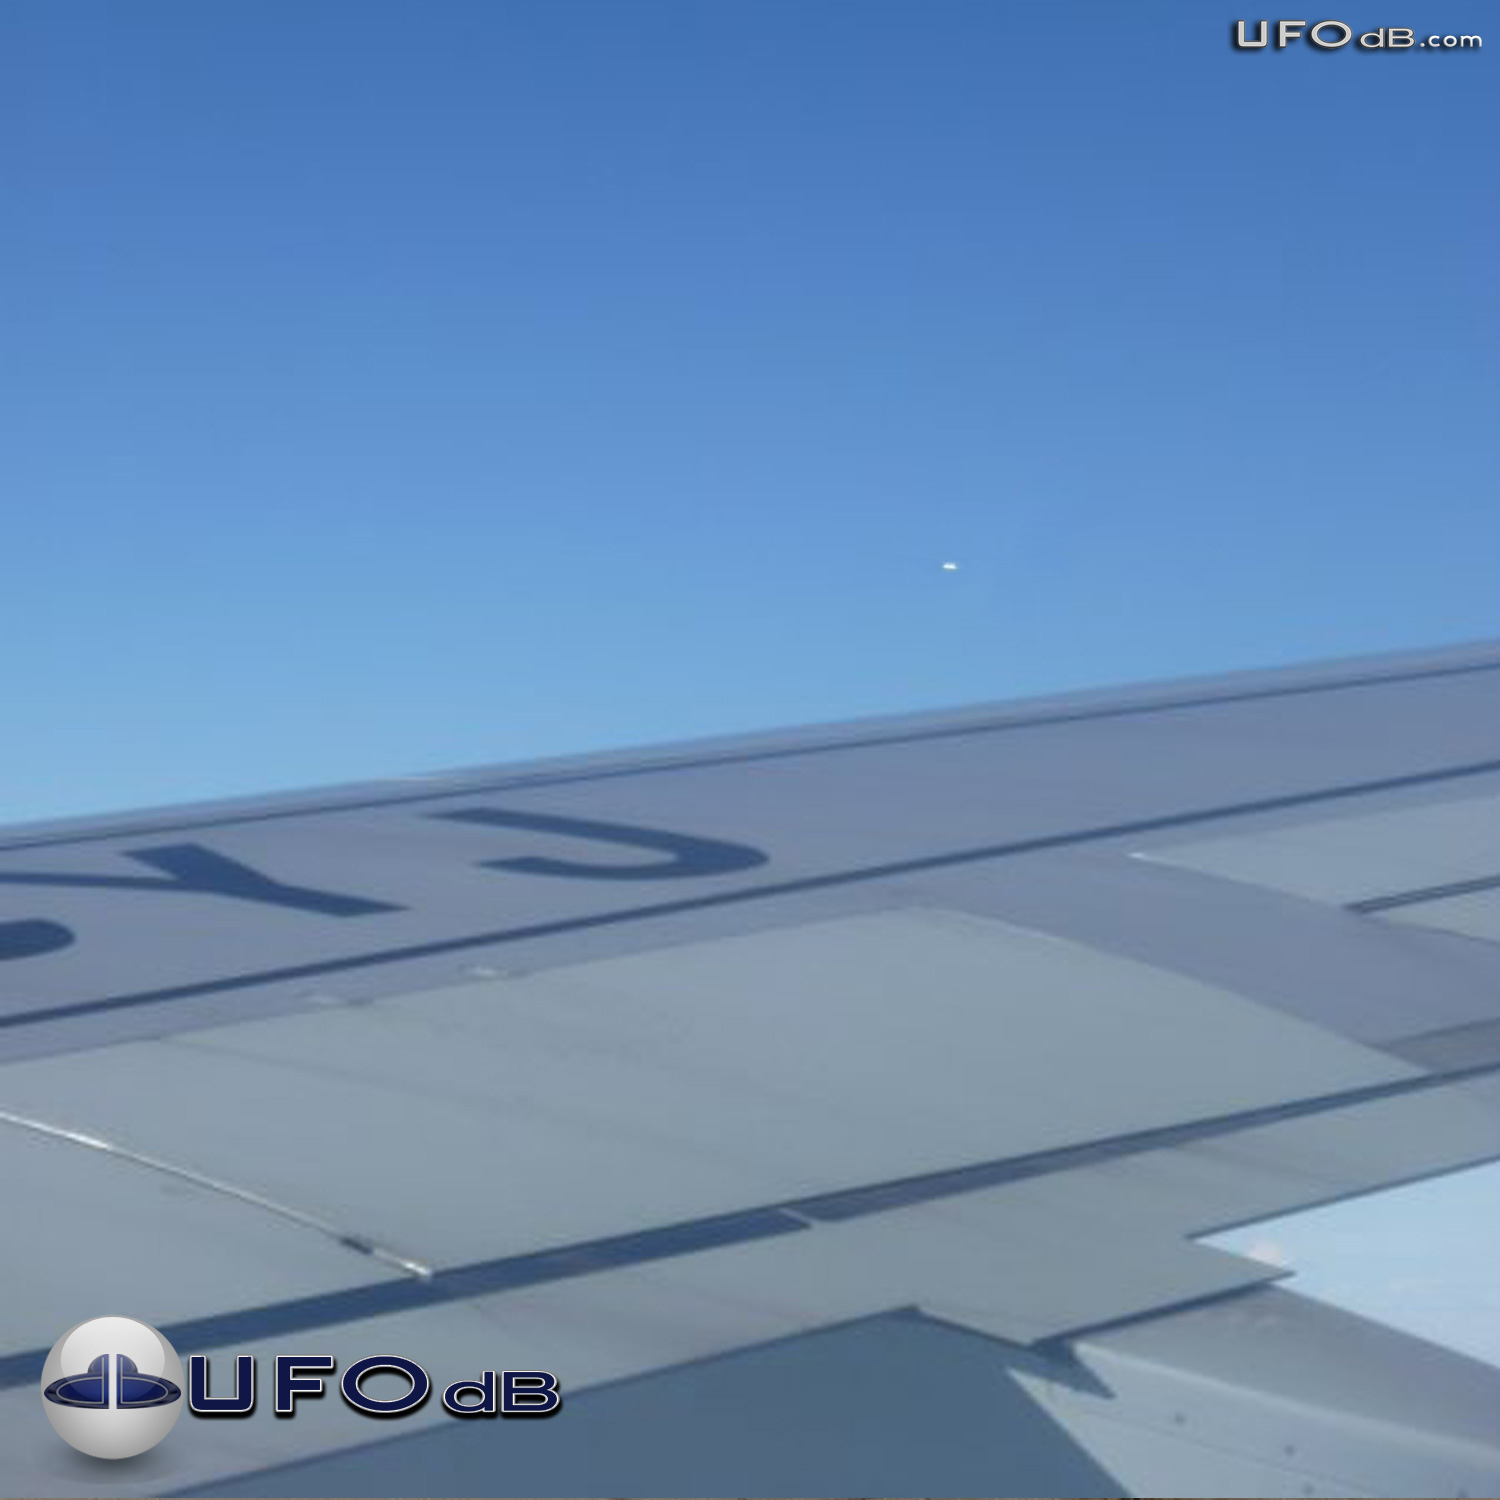 TACA passenger get UFO picture during flight over Peru | June 18 2010 UFO Picture #317-1